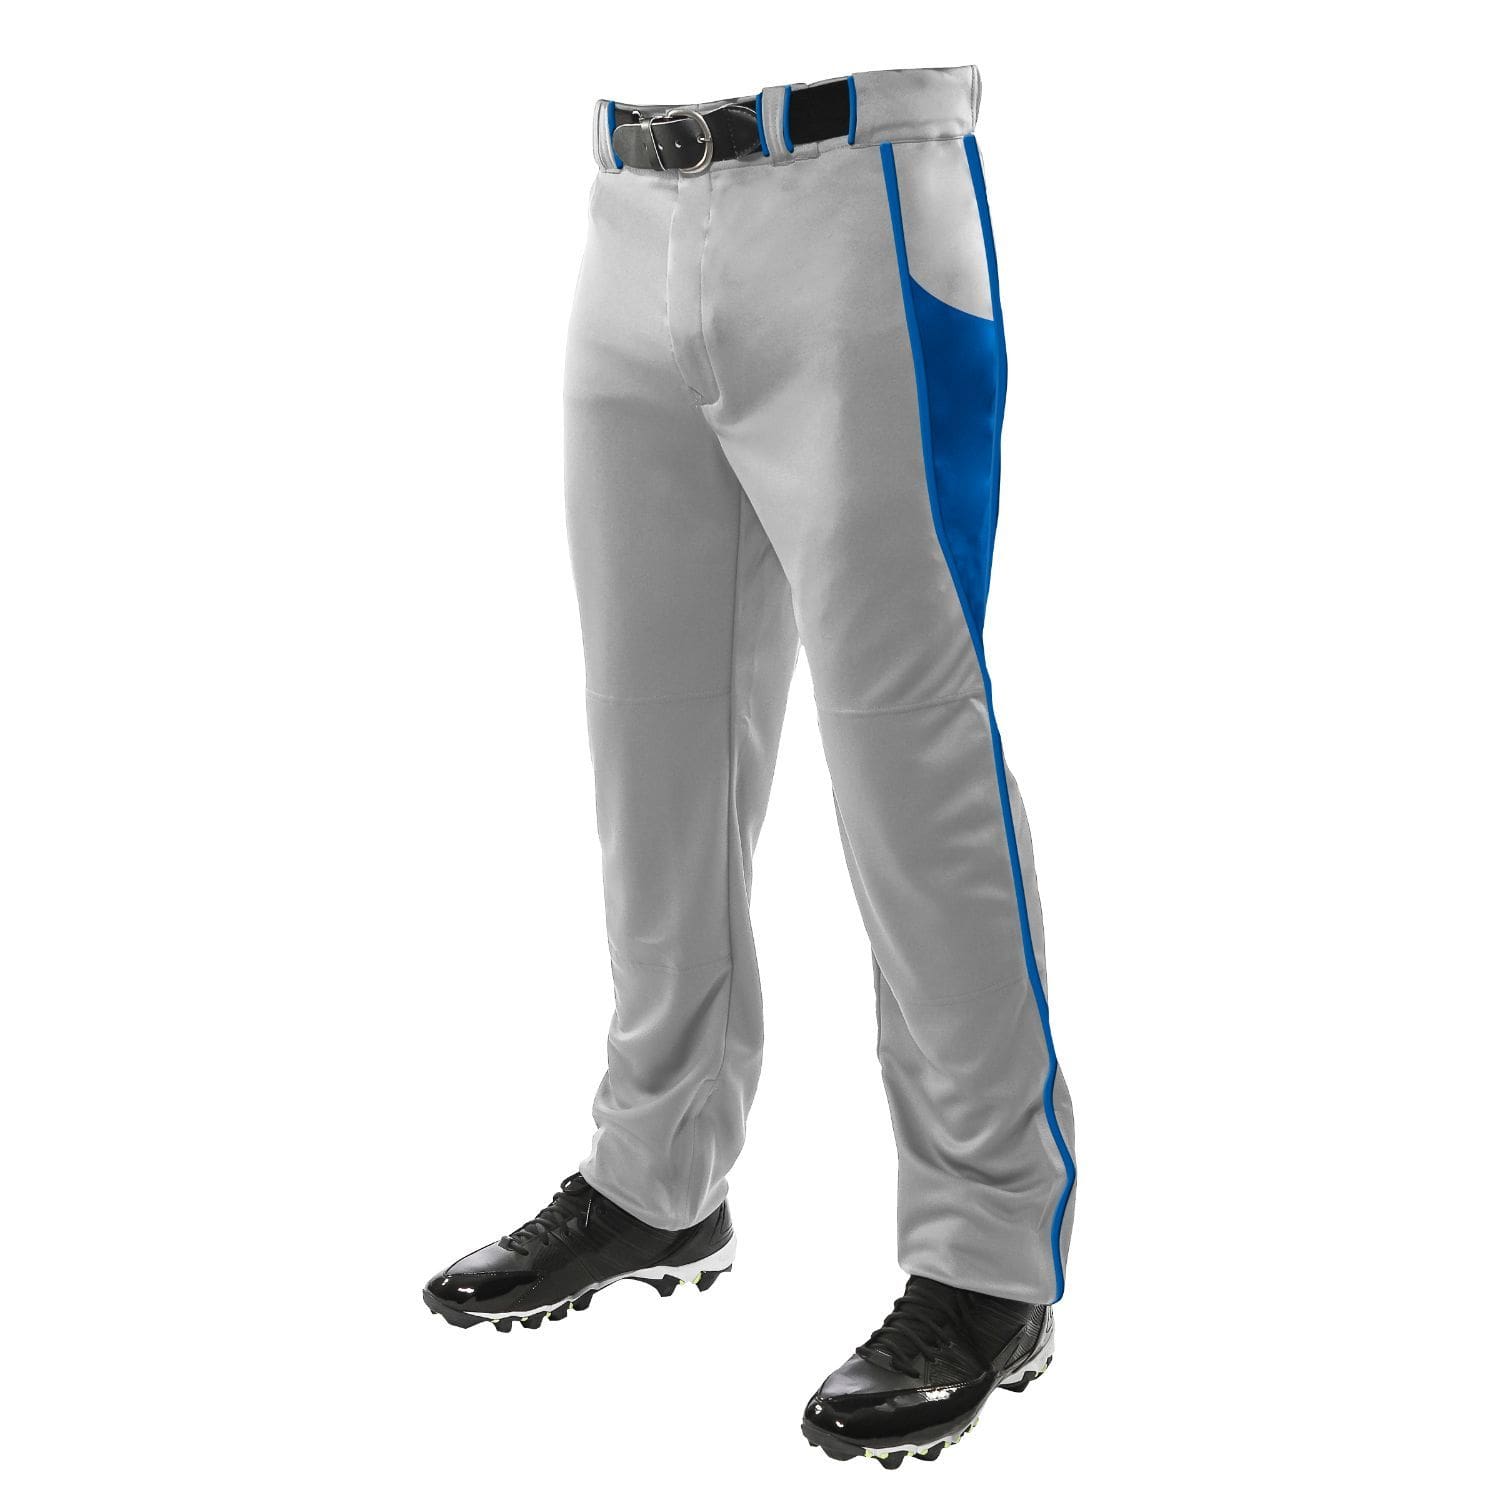 Champro Sports : Baseball Champro Adult Triple Crown Baseball Pant Grey Royal Blue SM